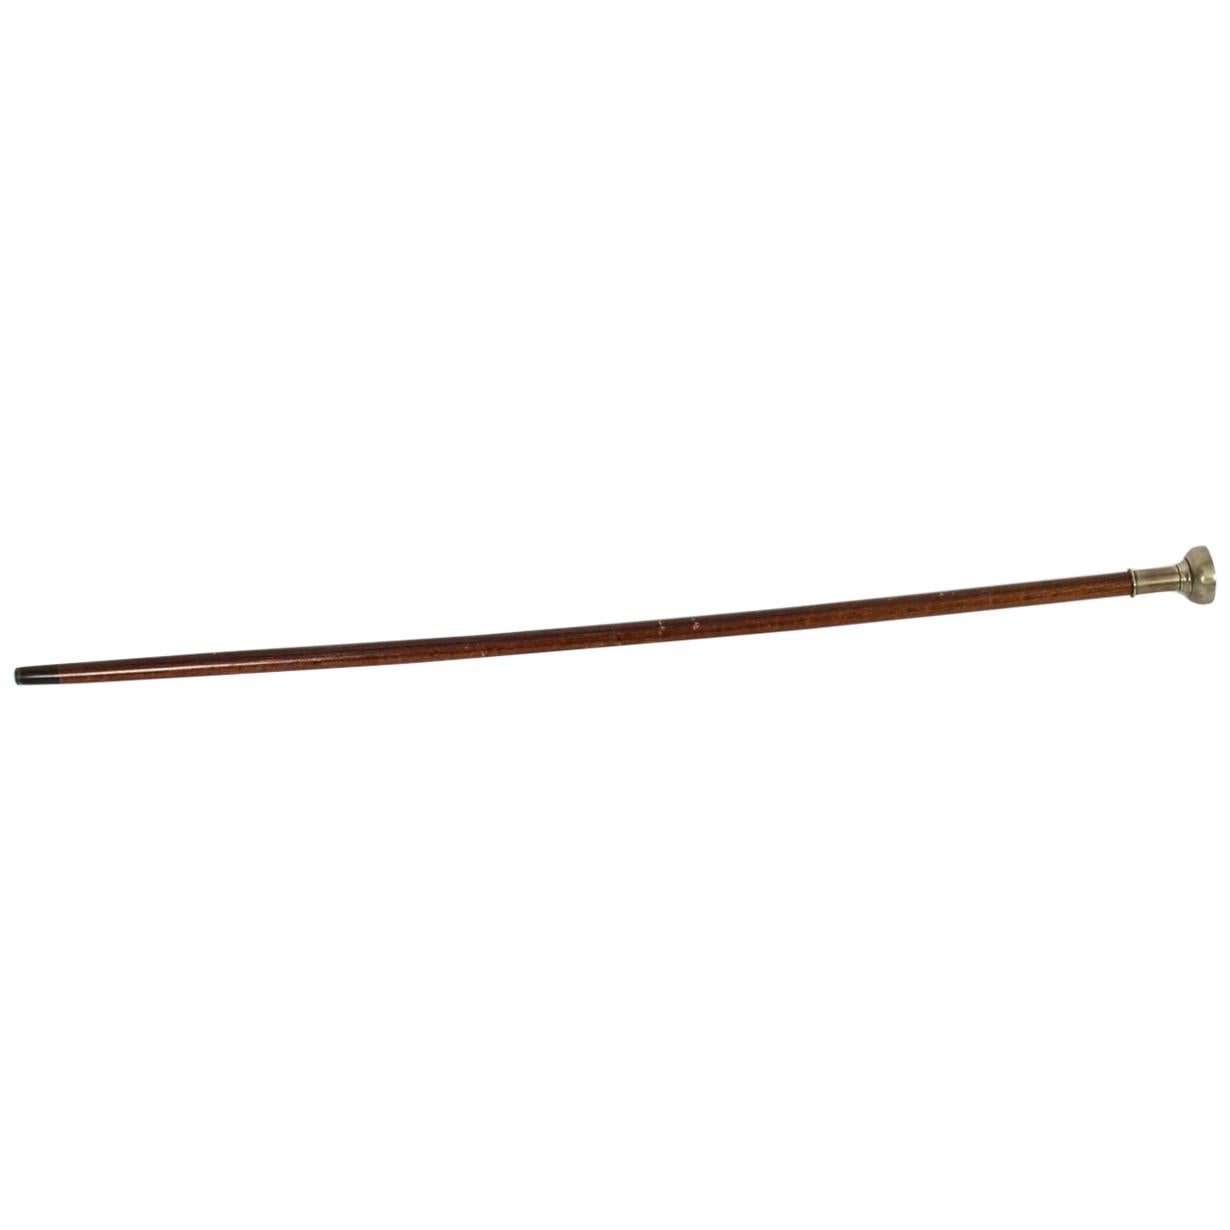 Antique Edwardian Walking Stick Cane Silvered Pommel, Early 20th Century